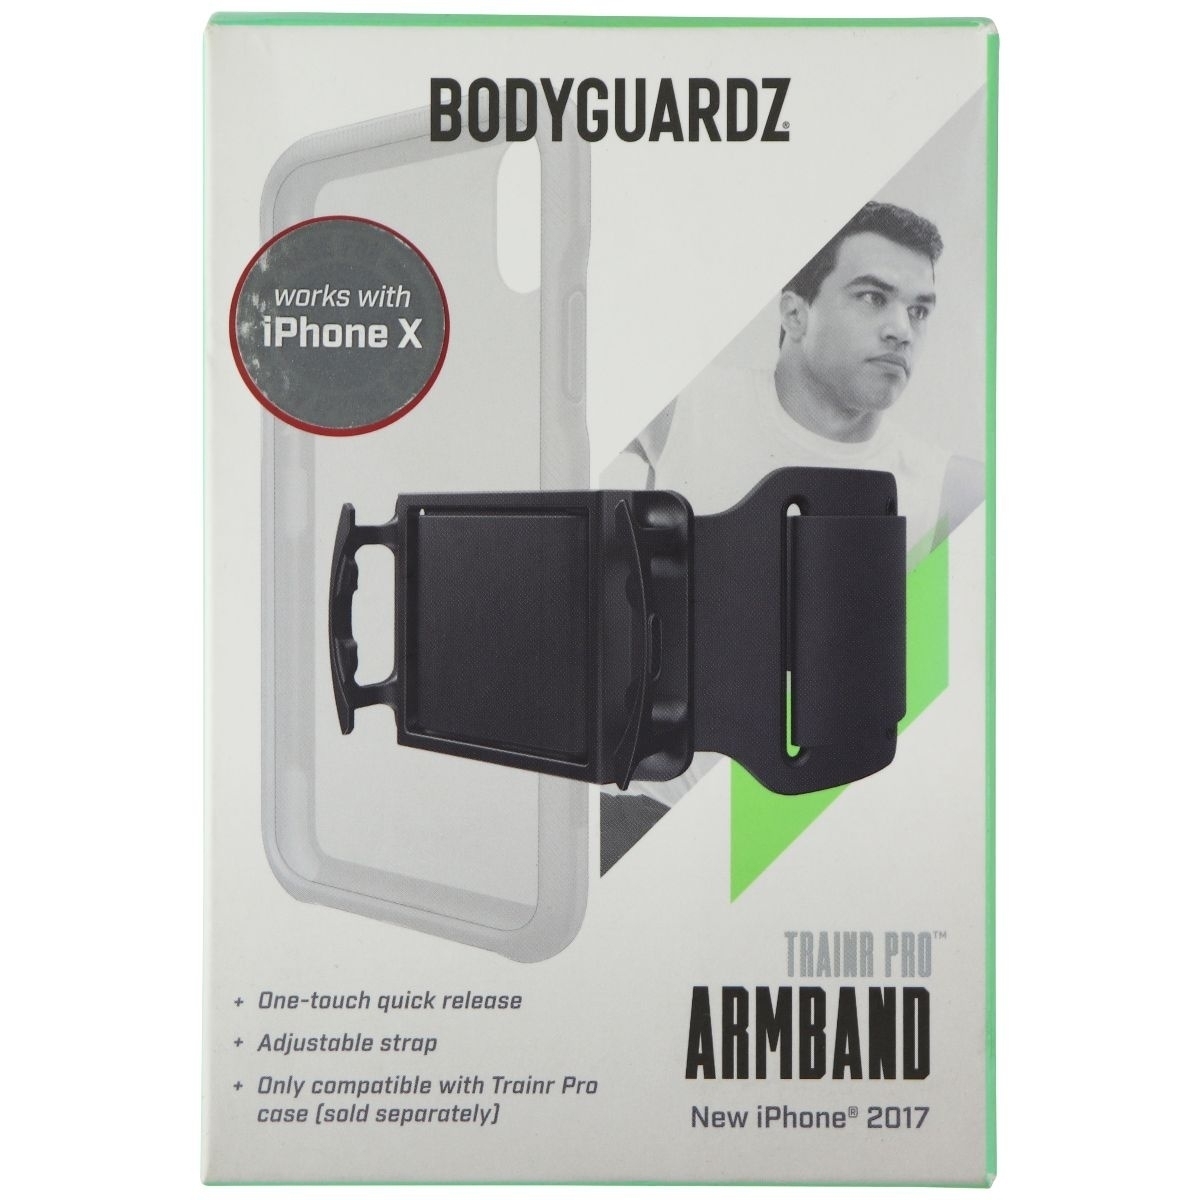 BoadyGuardz Trainr Pro Armband For IPhone Xs/X Trainr Pro Cases - Black